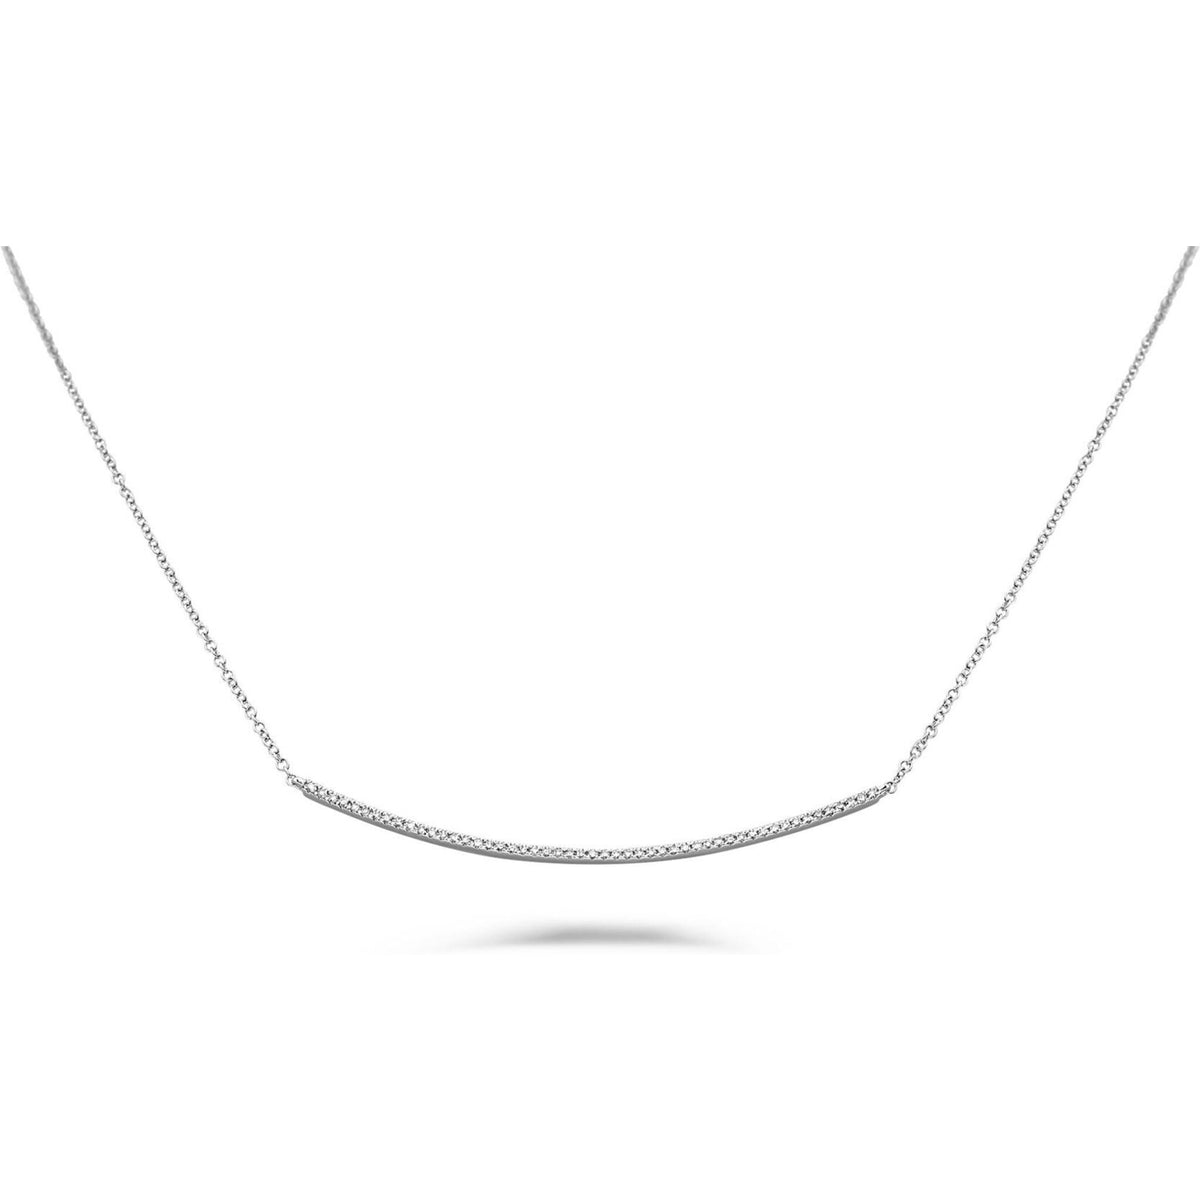 Roman & Jules 14K White Gold Curved Smile Diamond Bar Necklace - 0.13 Carat Total Diamond Weight